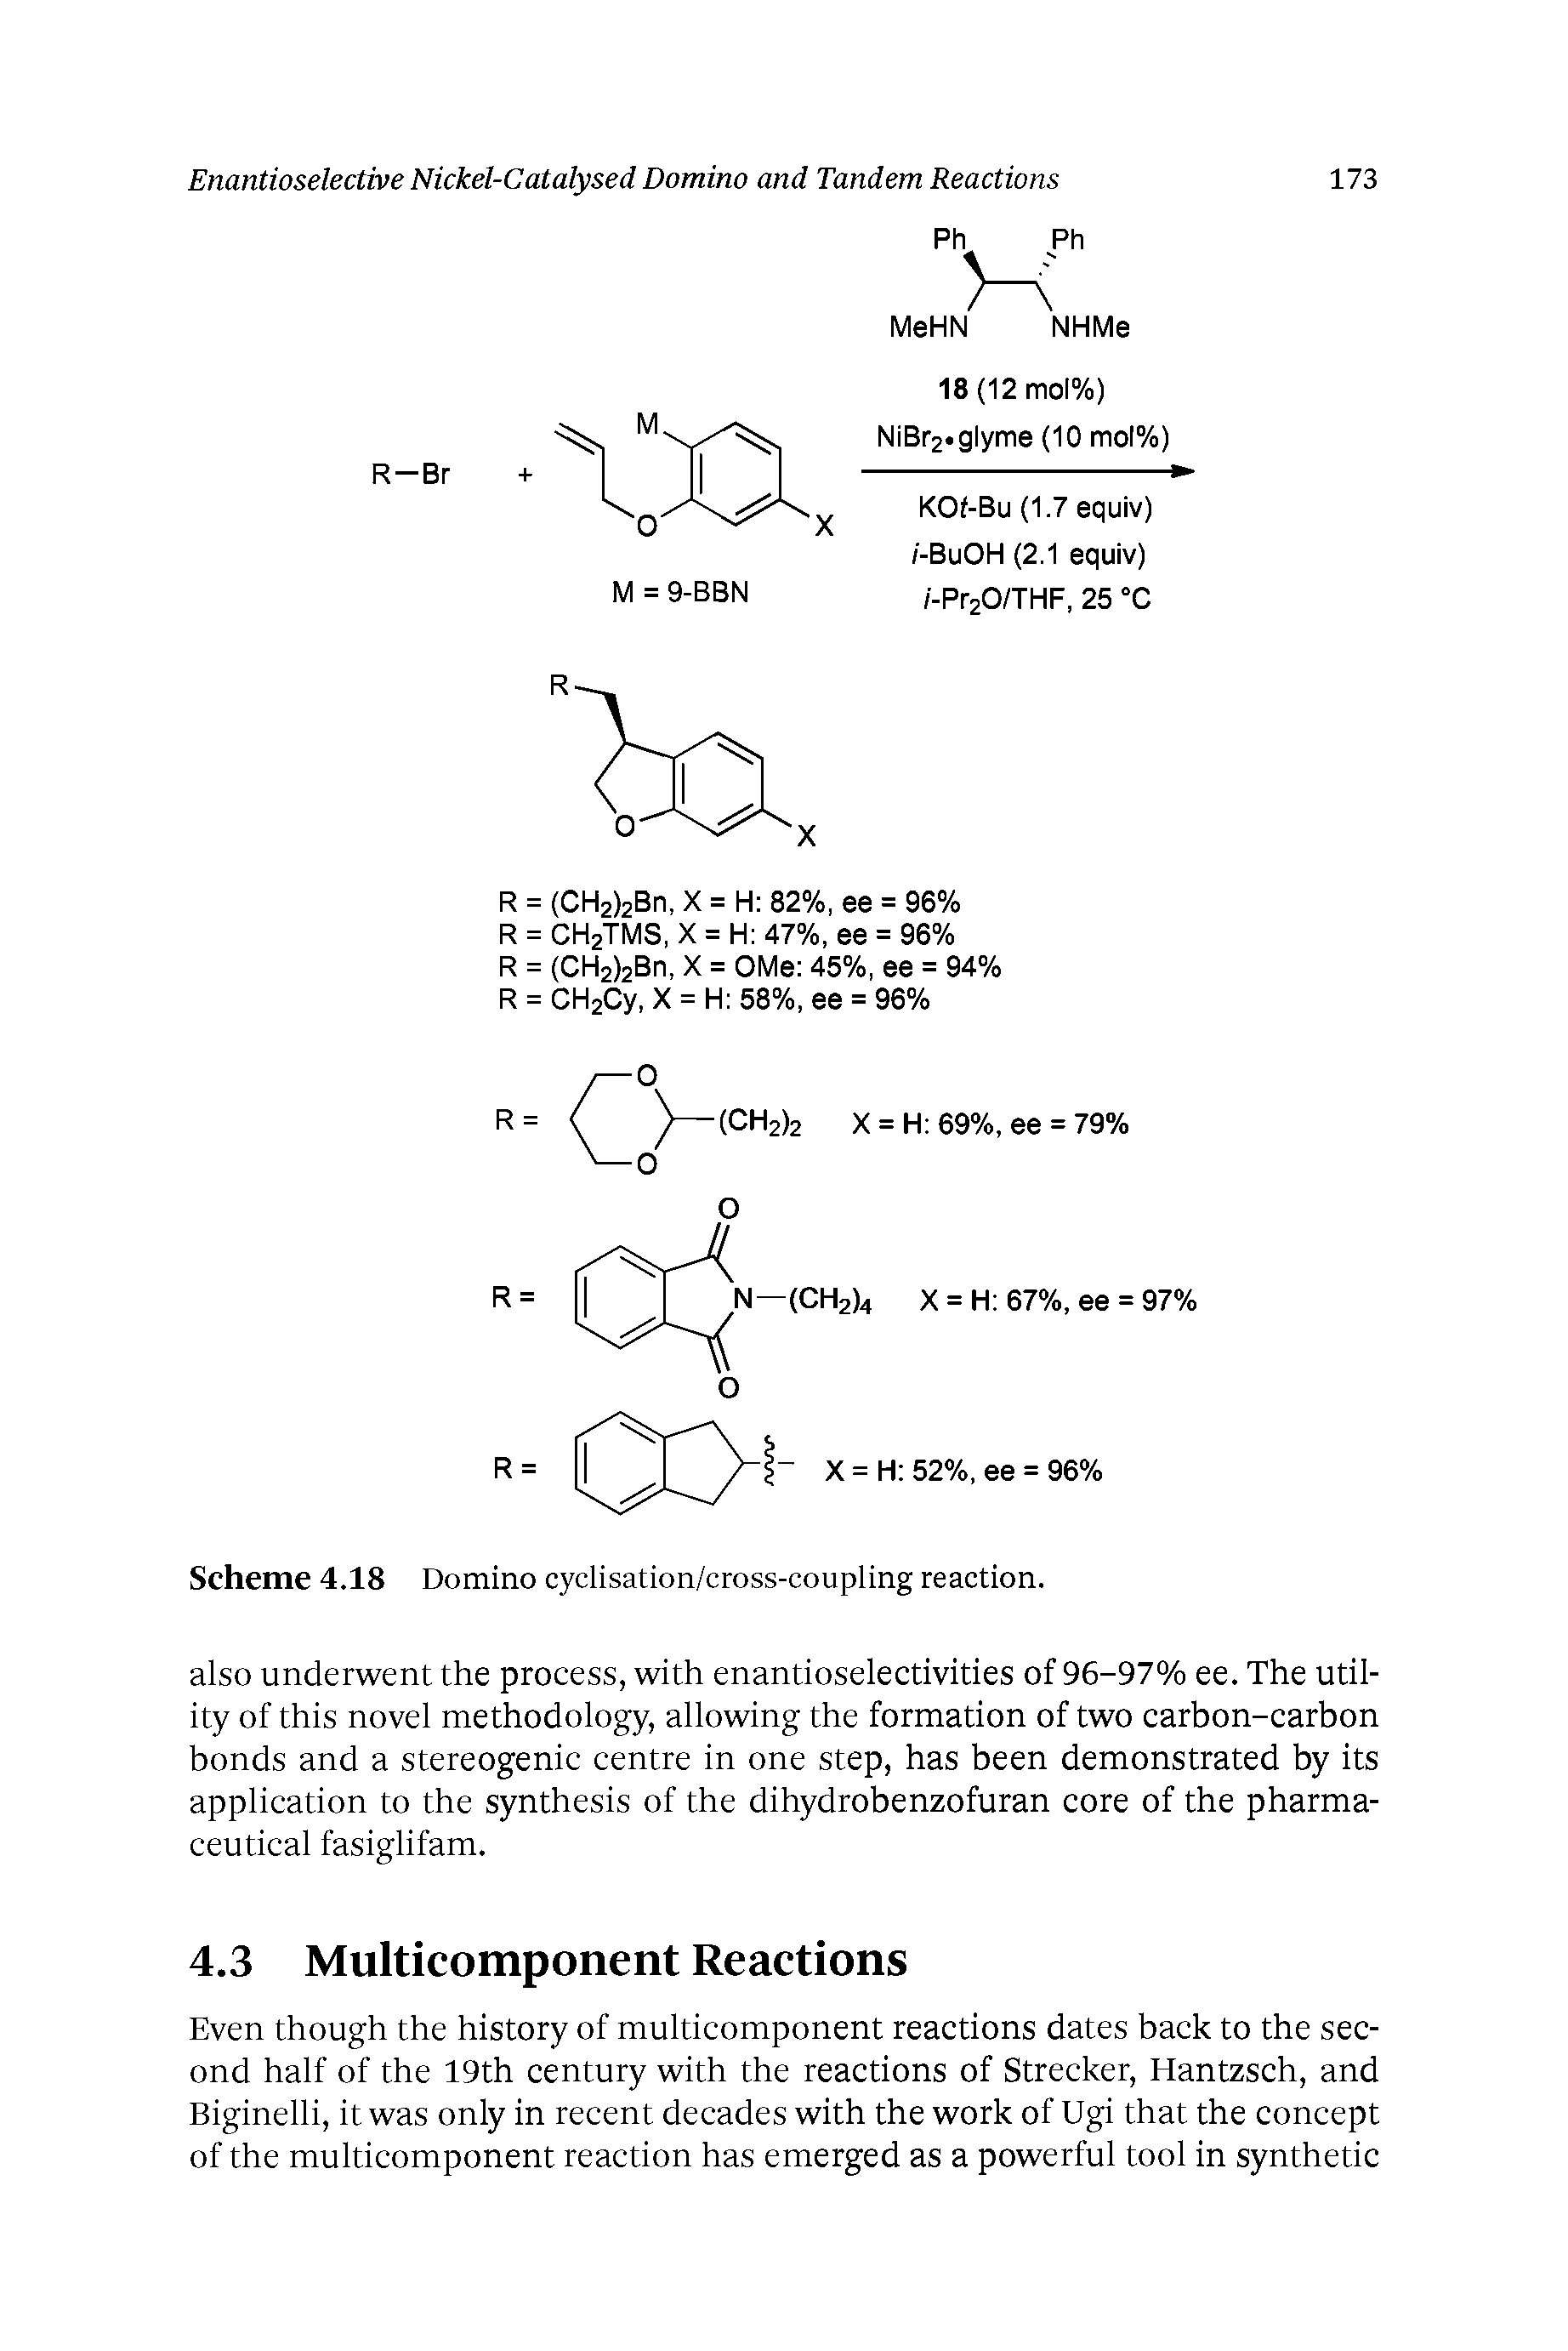 Scheme 4.18 Domino cyclisation/cross-coupling reaction.